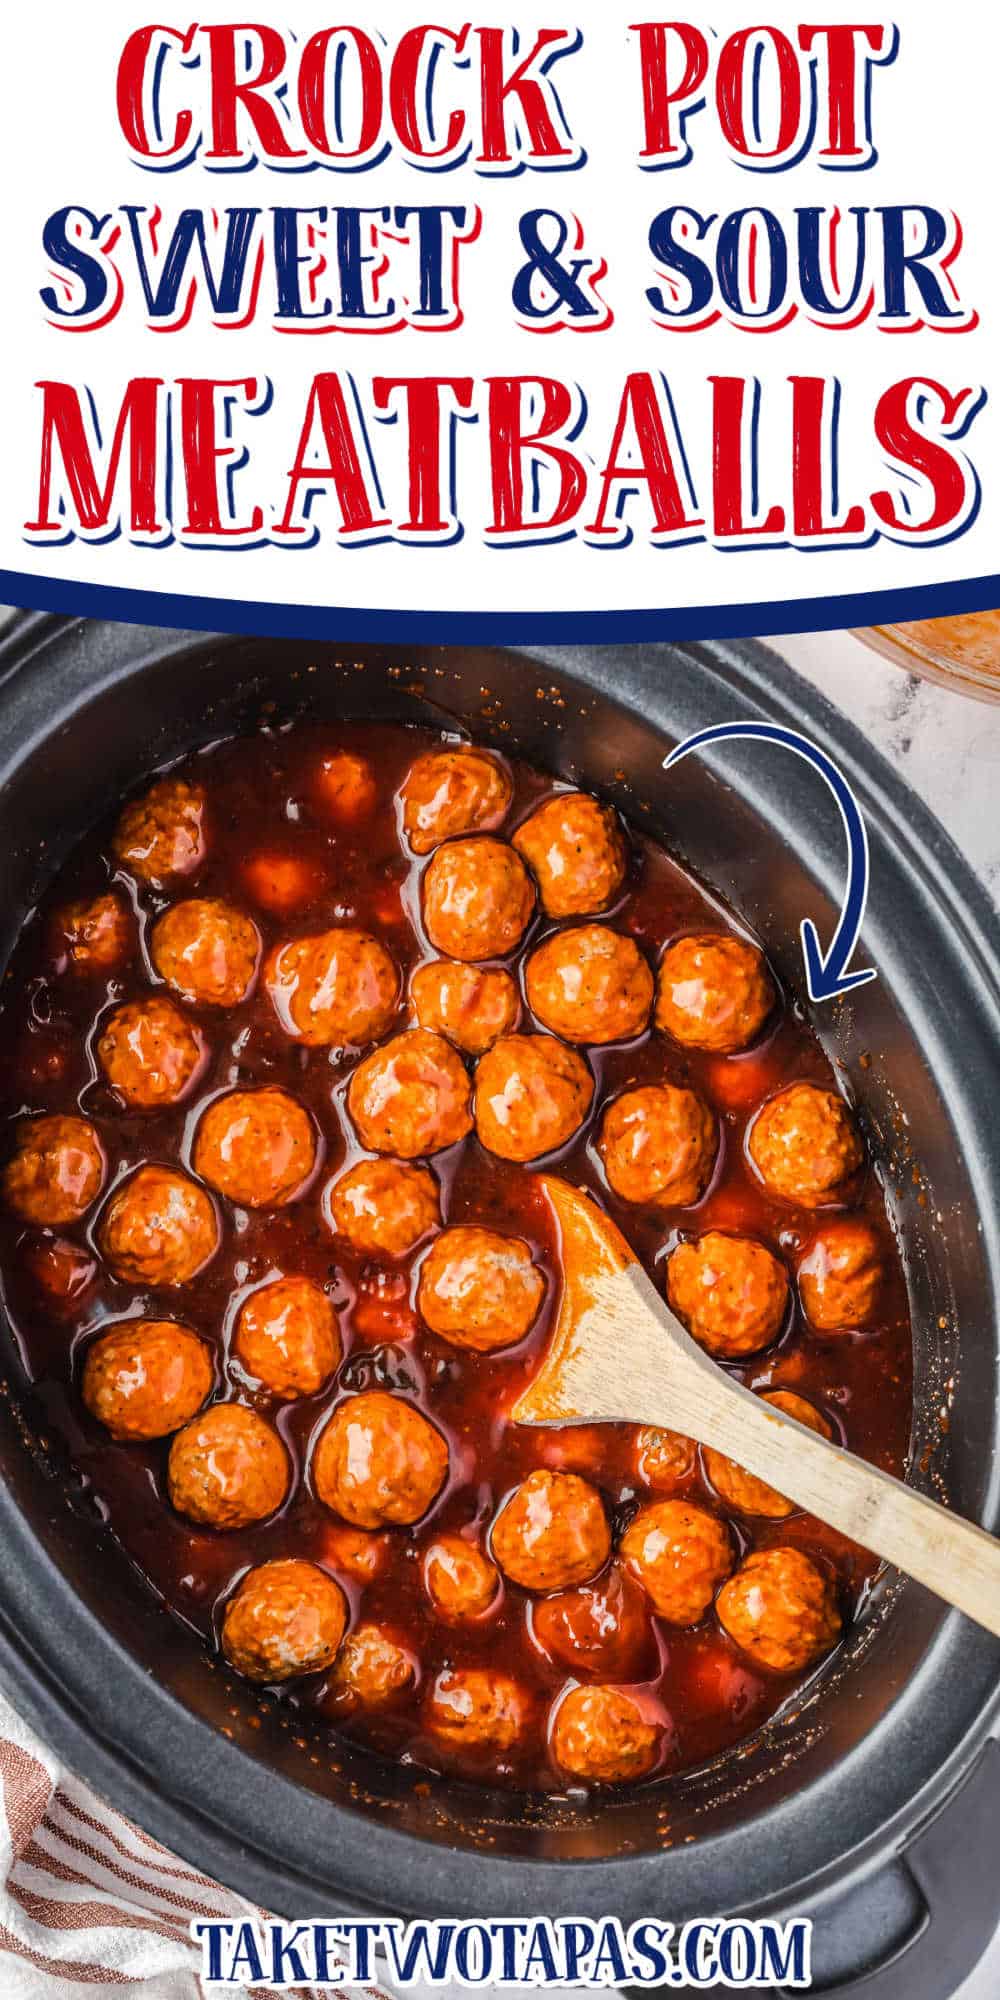 crockpot with meatballs